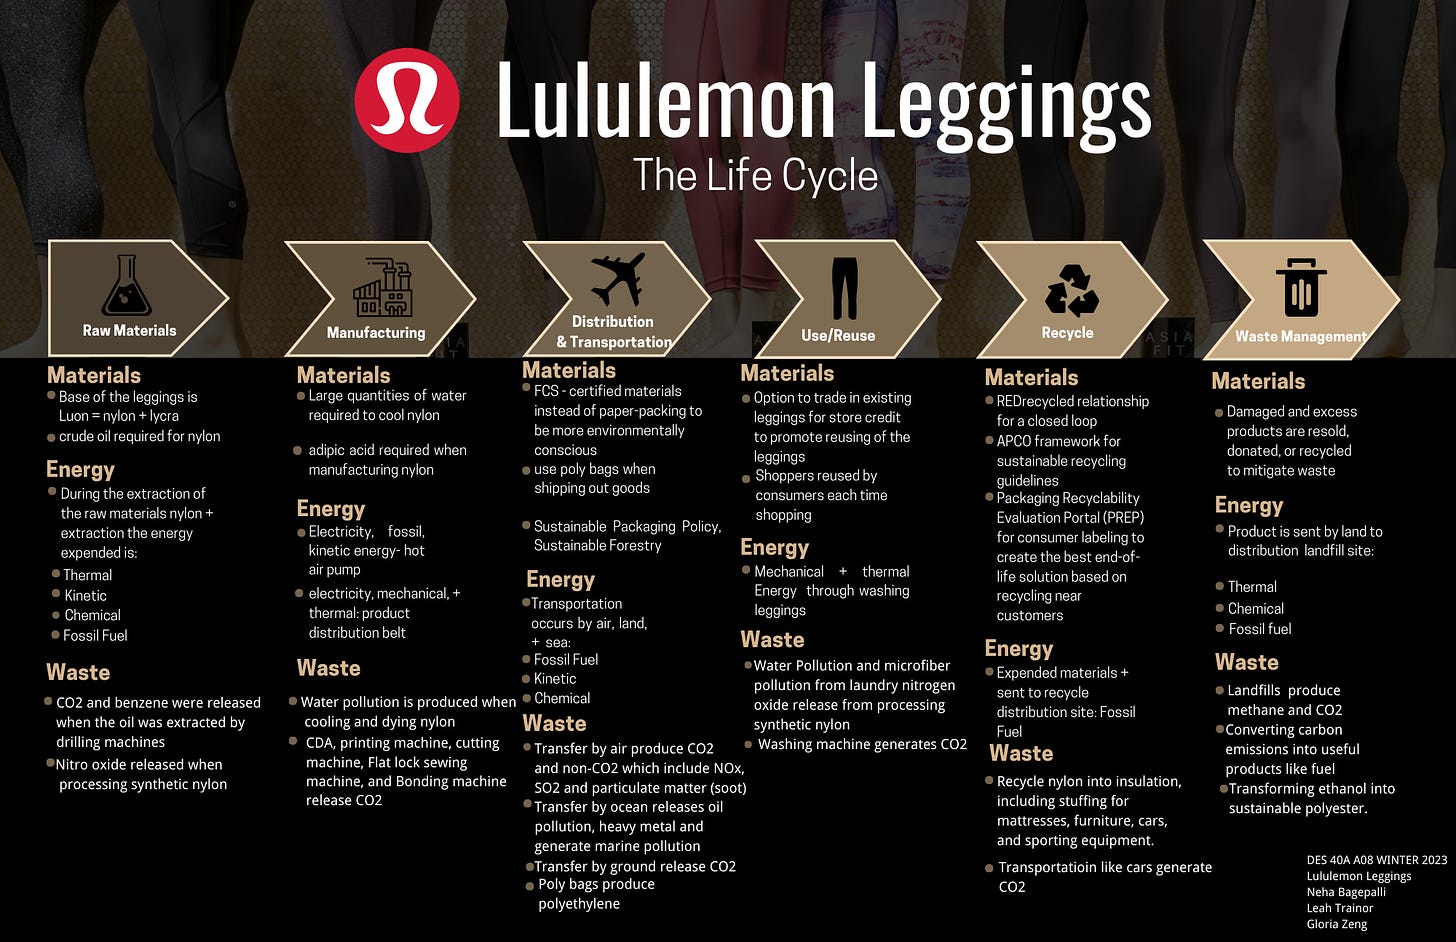 Lululemon leggings — Design Life-Cycle